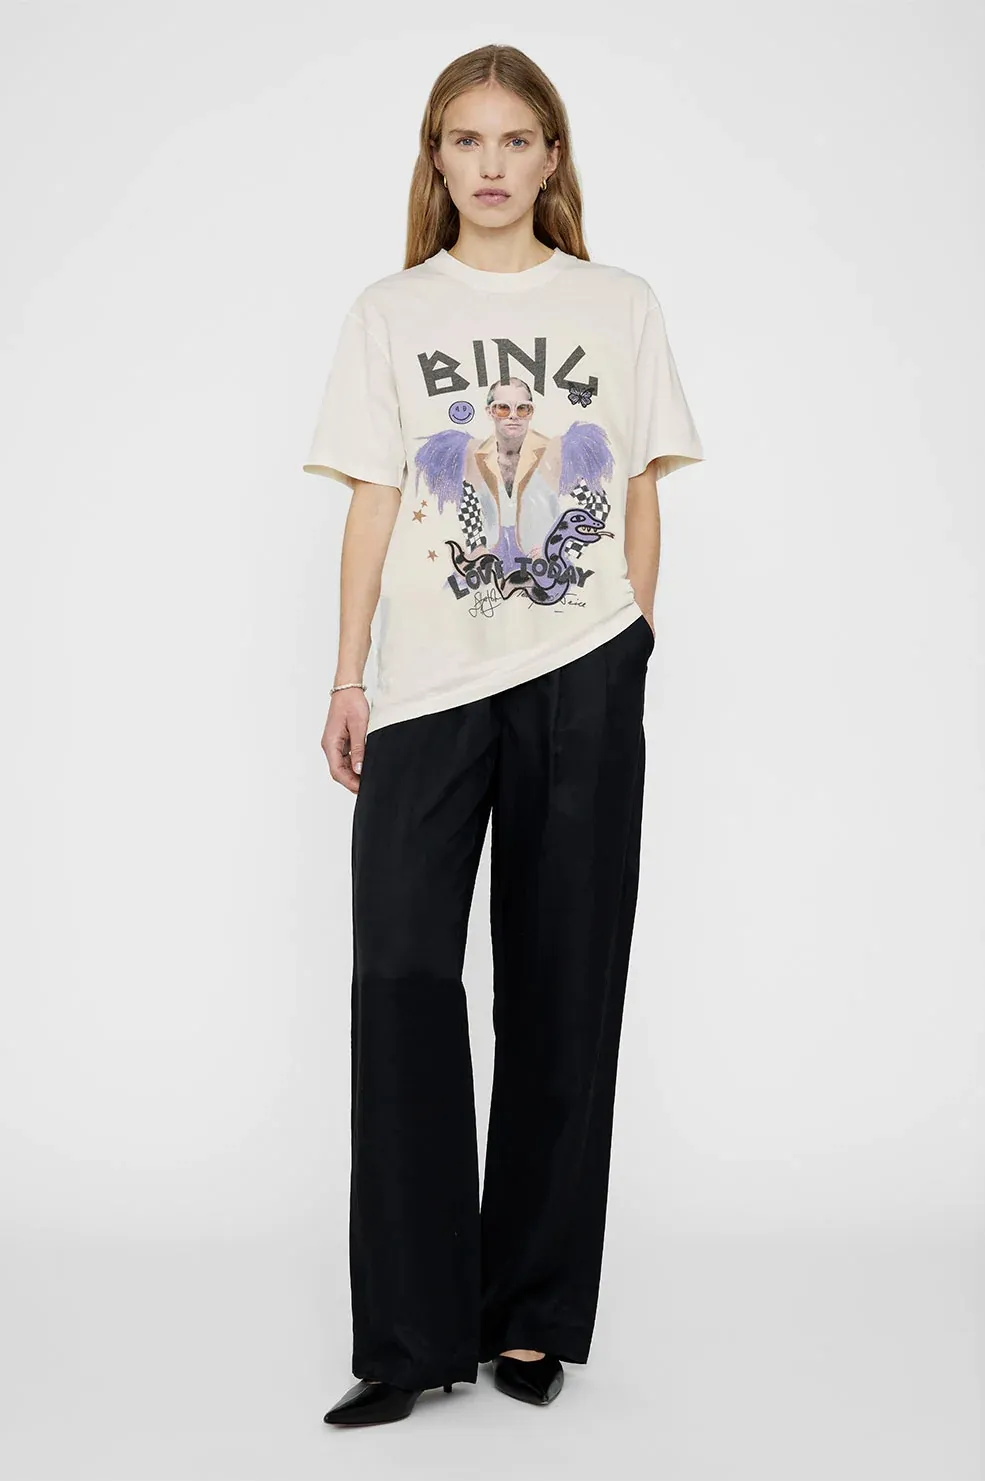 AB LILI WOMEN DESINER TEES BINGSファッションイラストコットンプリントTシャツラウンドネックTシャツ夏トップ224